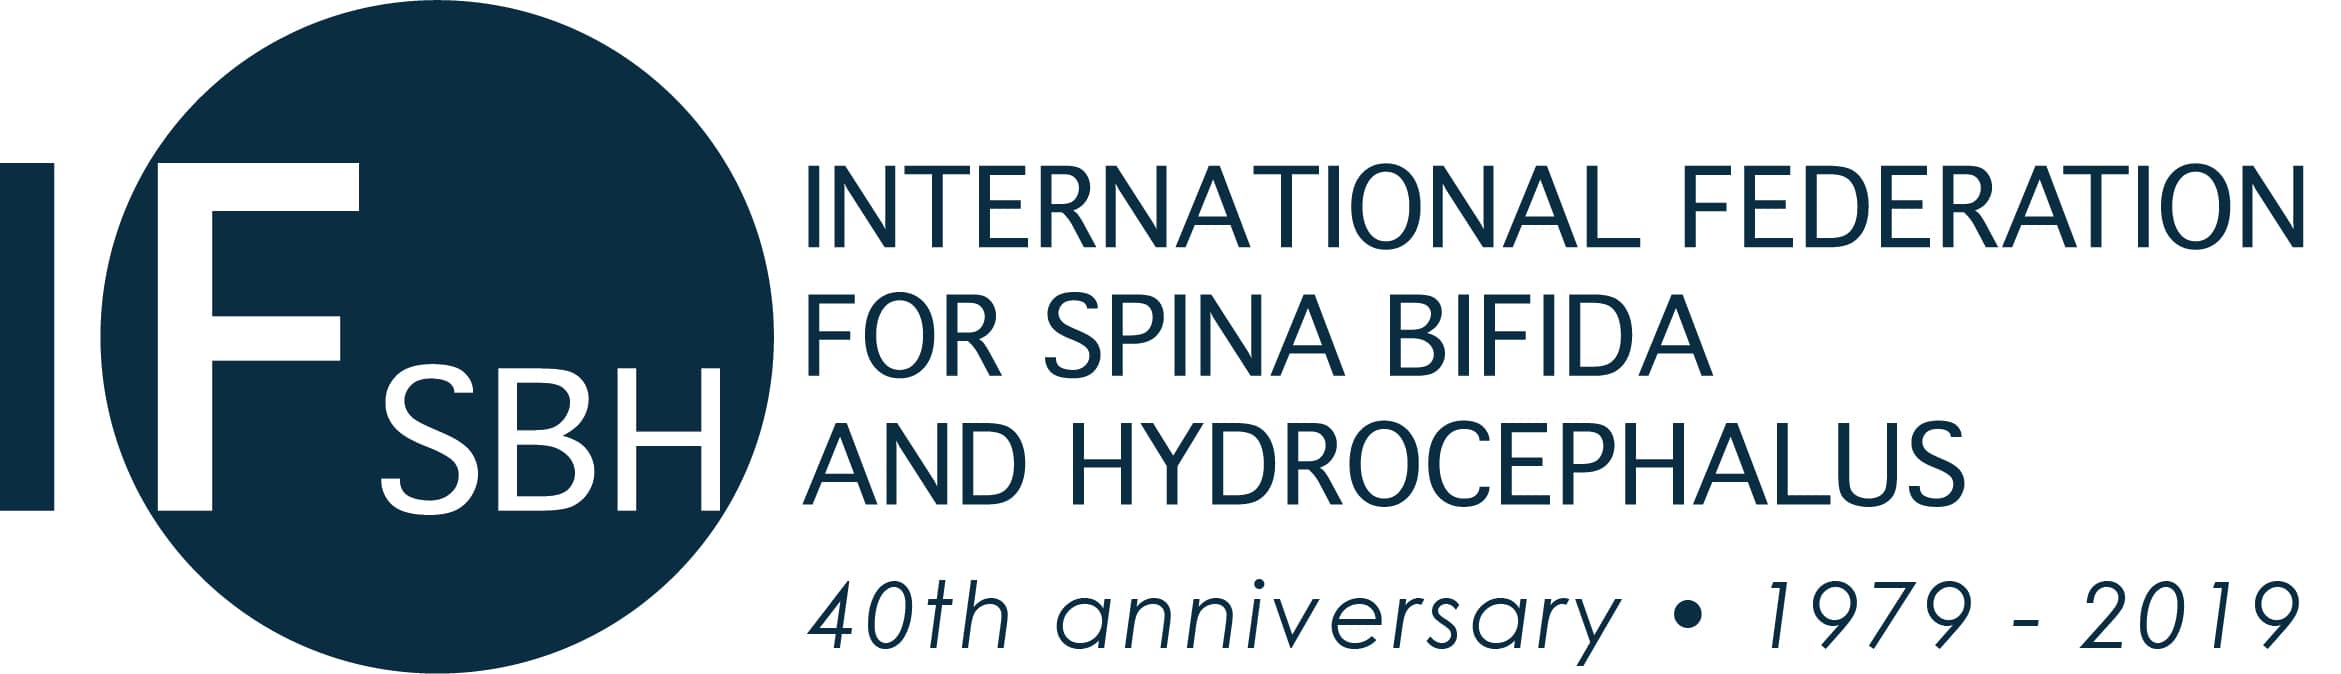 International Federation for Spina Bifida